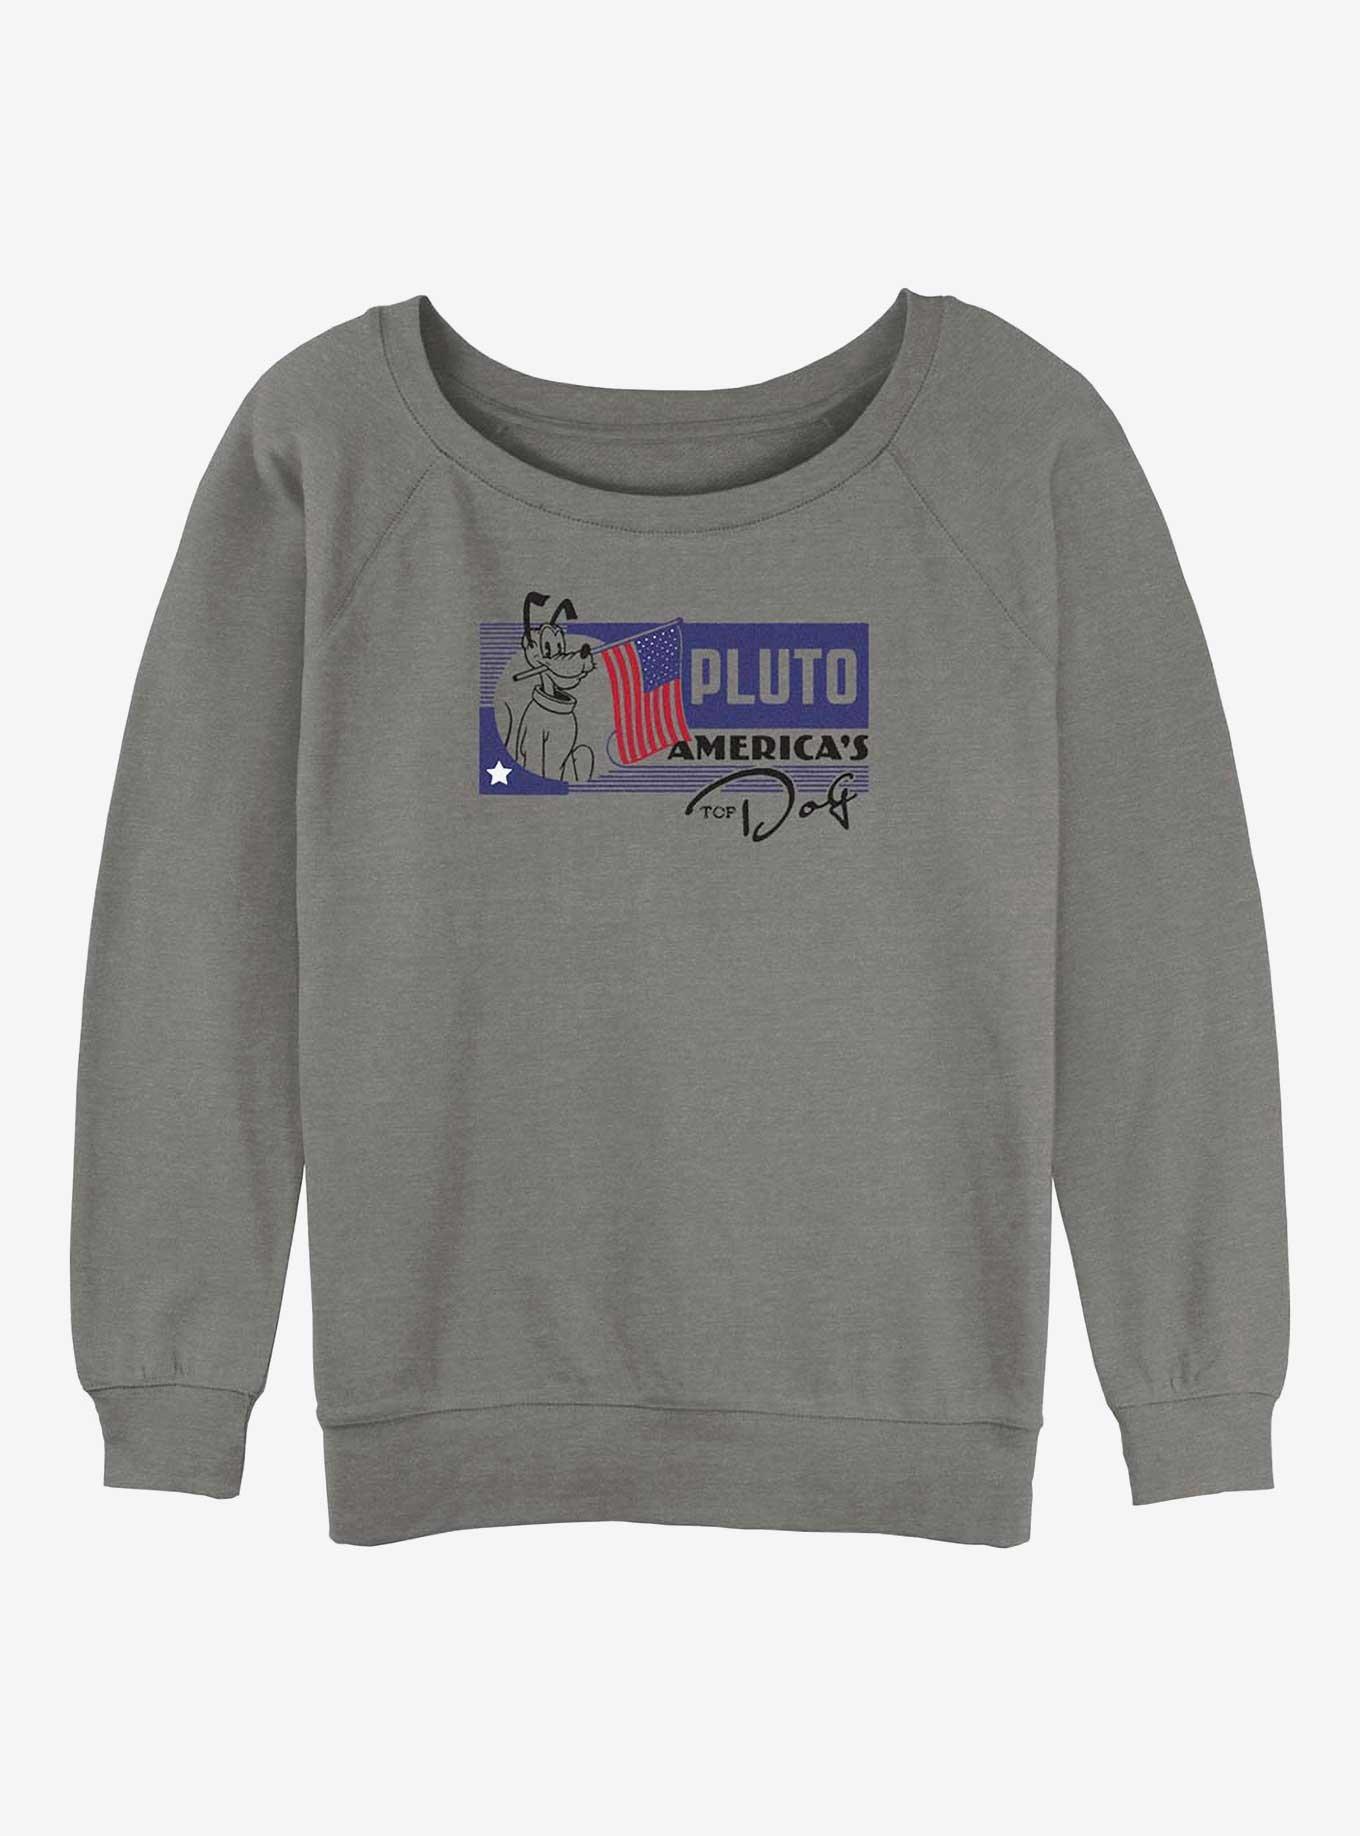 Disney 100 Pluto America's Top Dog Girls Slouchy Sweatshirt, GRAY HTR, hi-res